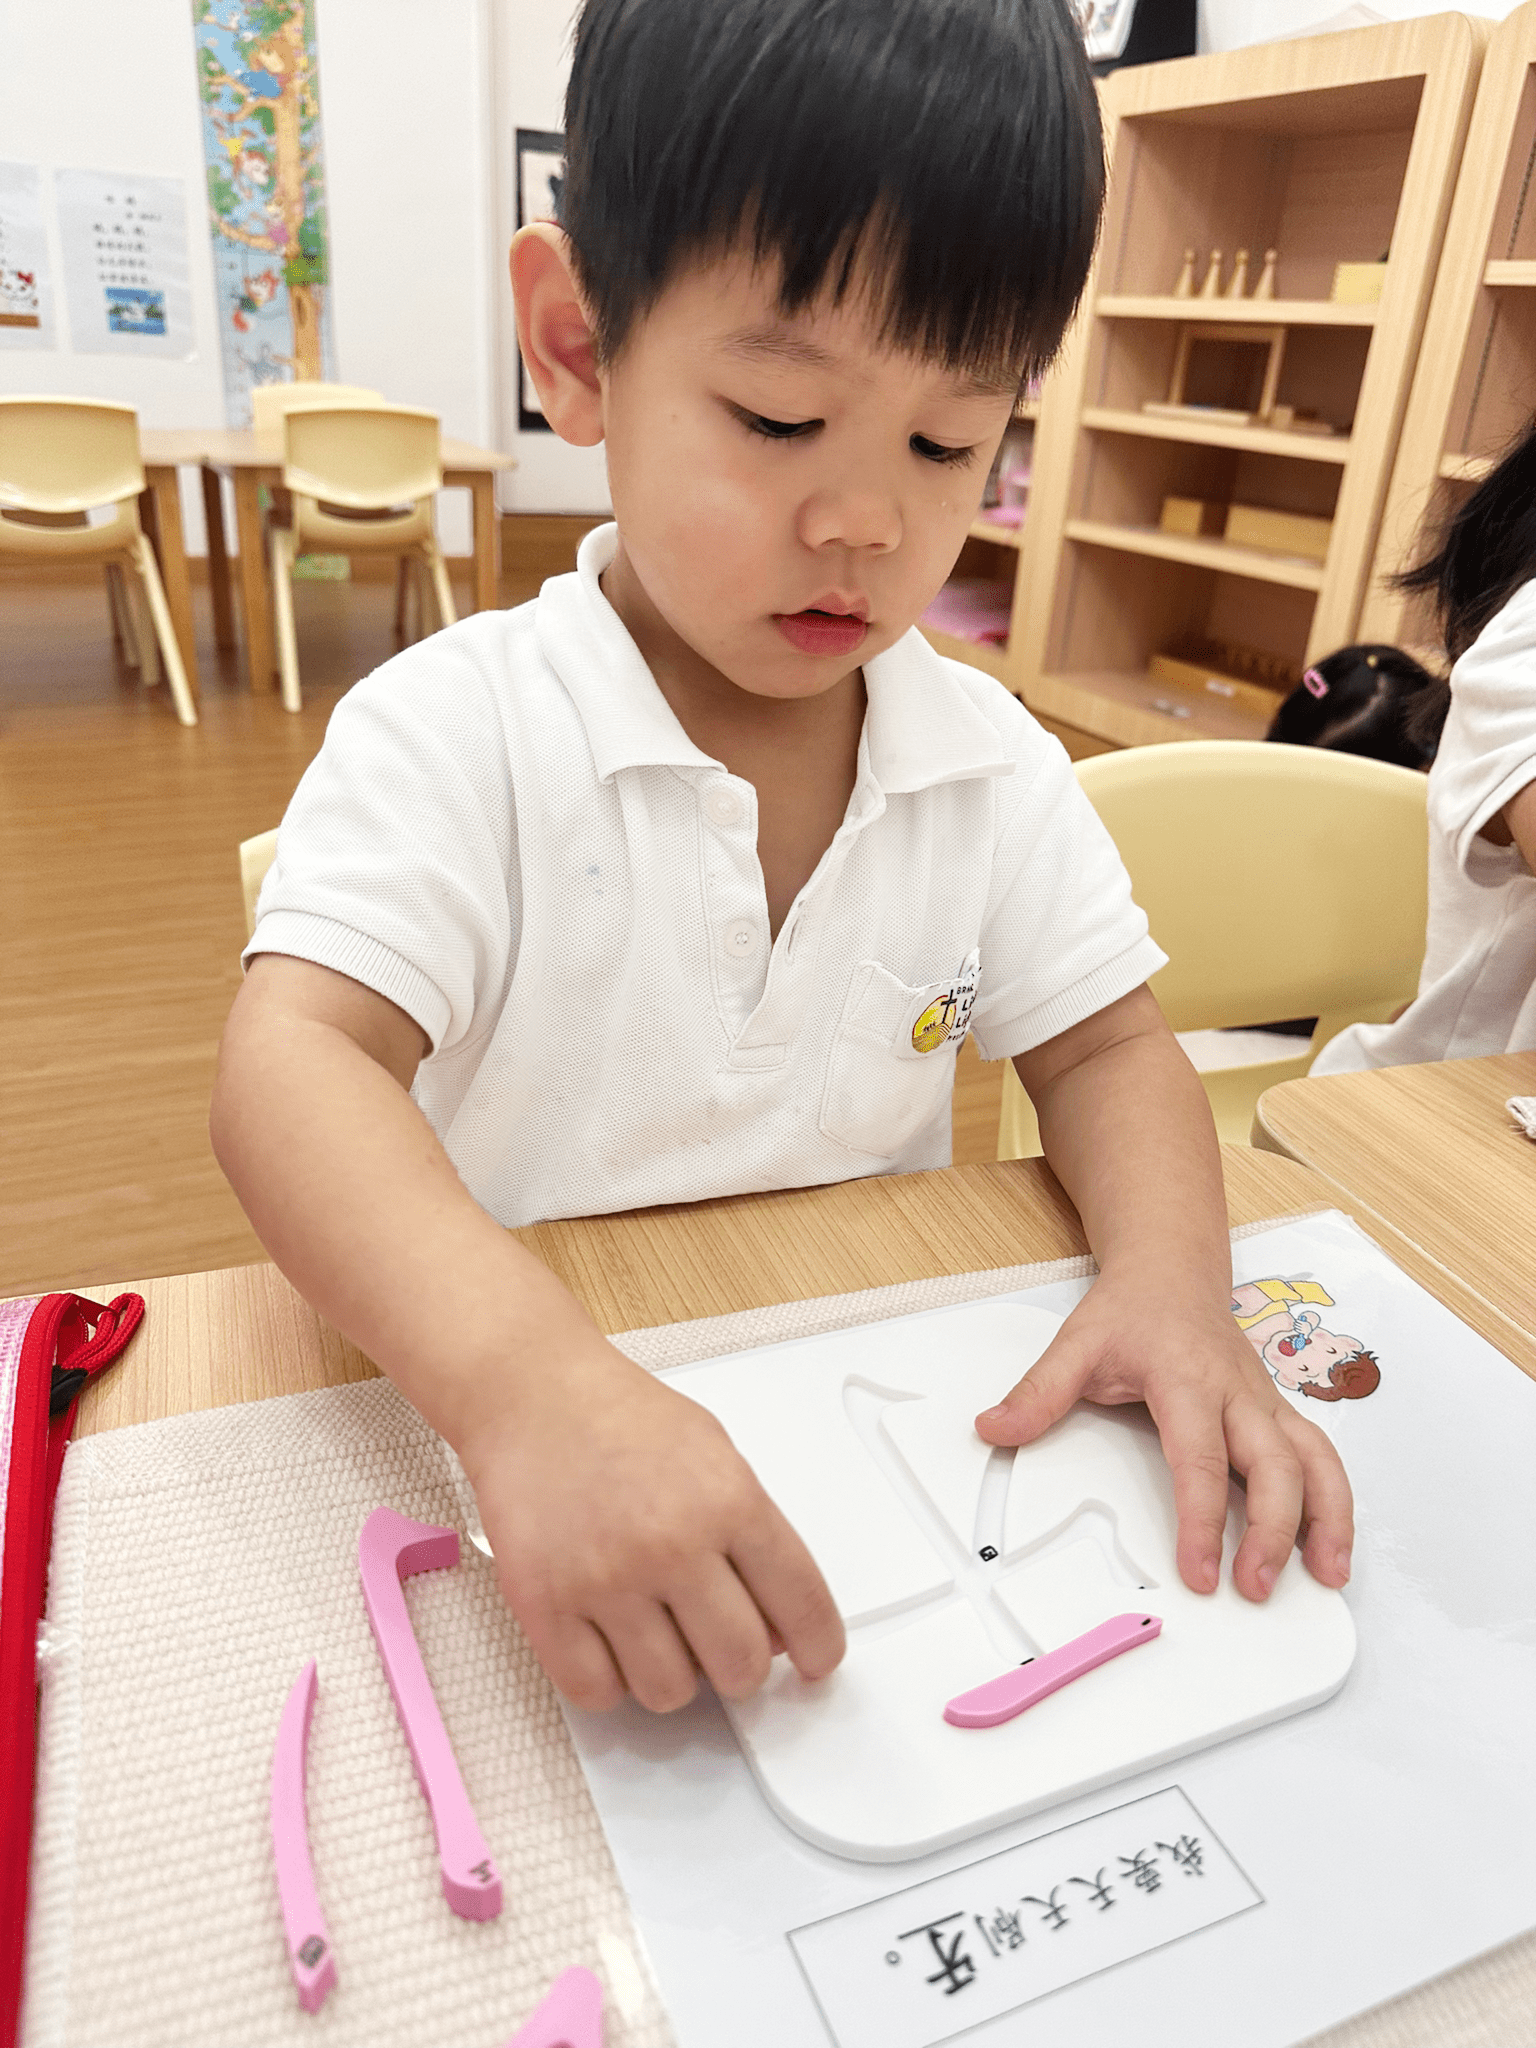 Inquiry and Montessori Method